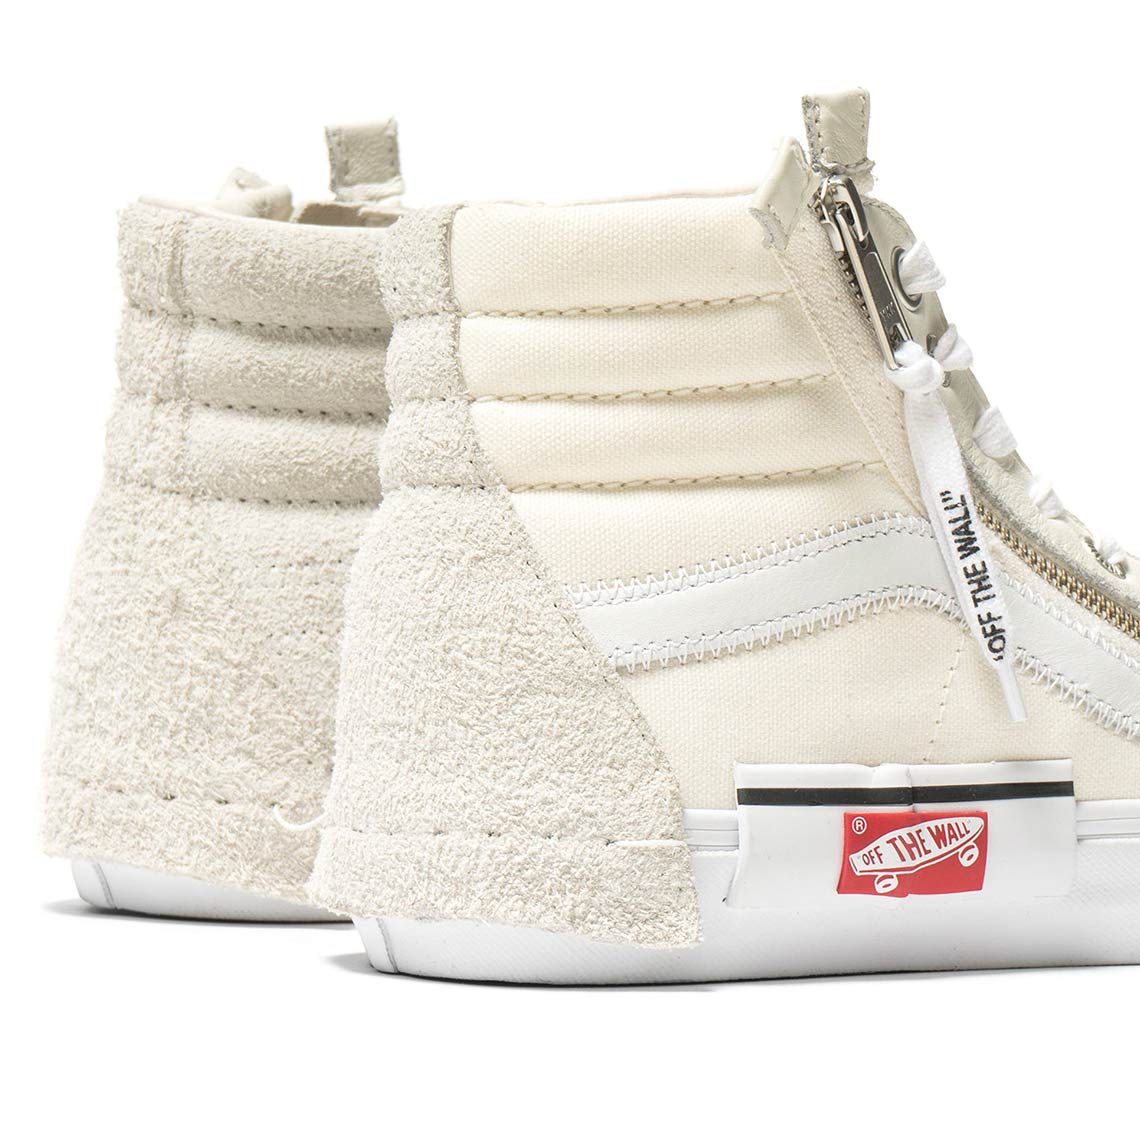 Virgil Abloh Vans Sk8 Hi + Slip-On Available Now | SneakerNews.com